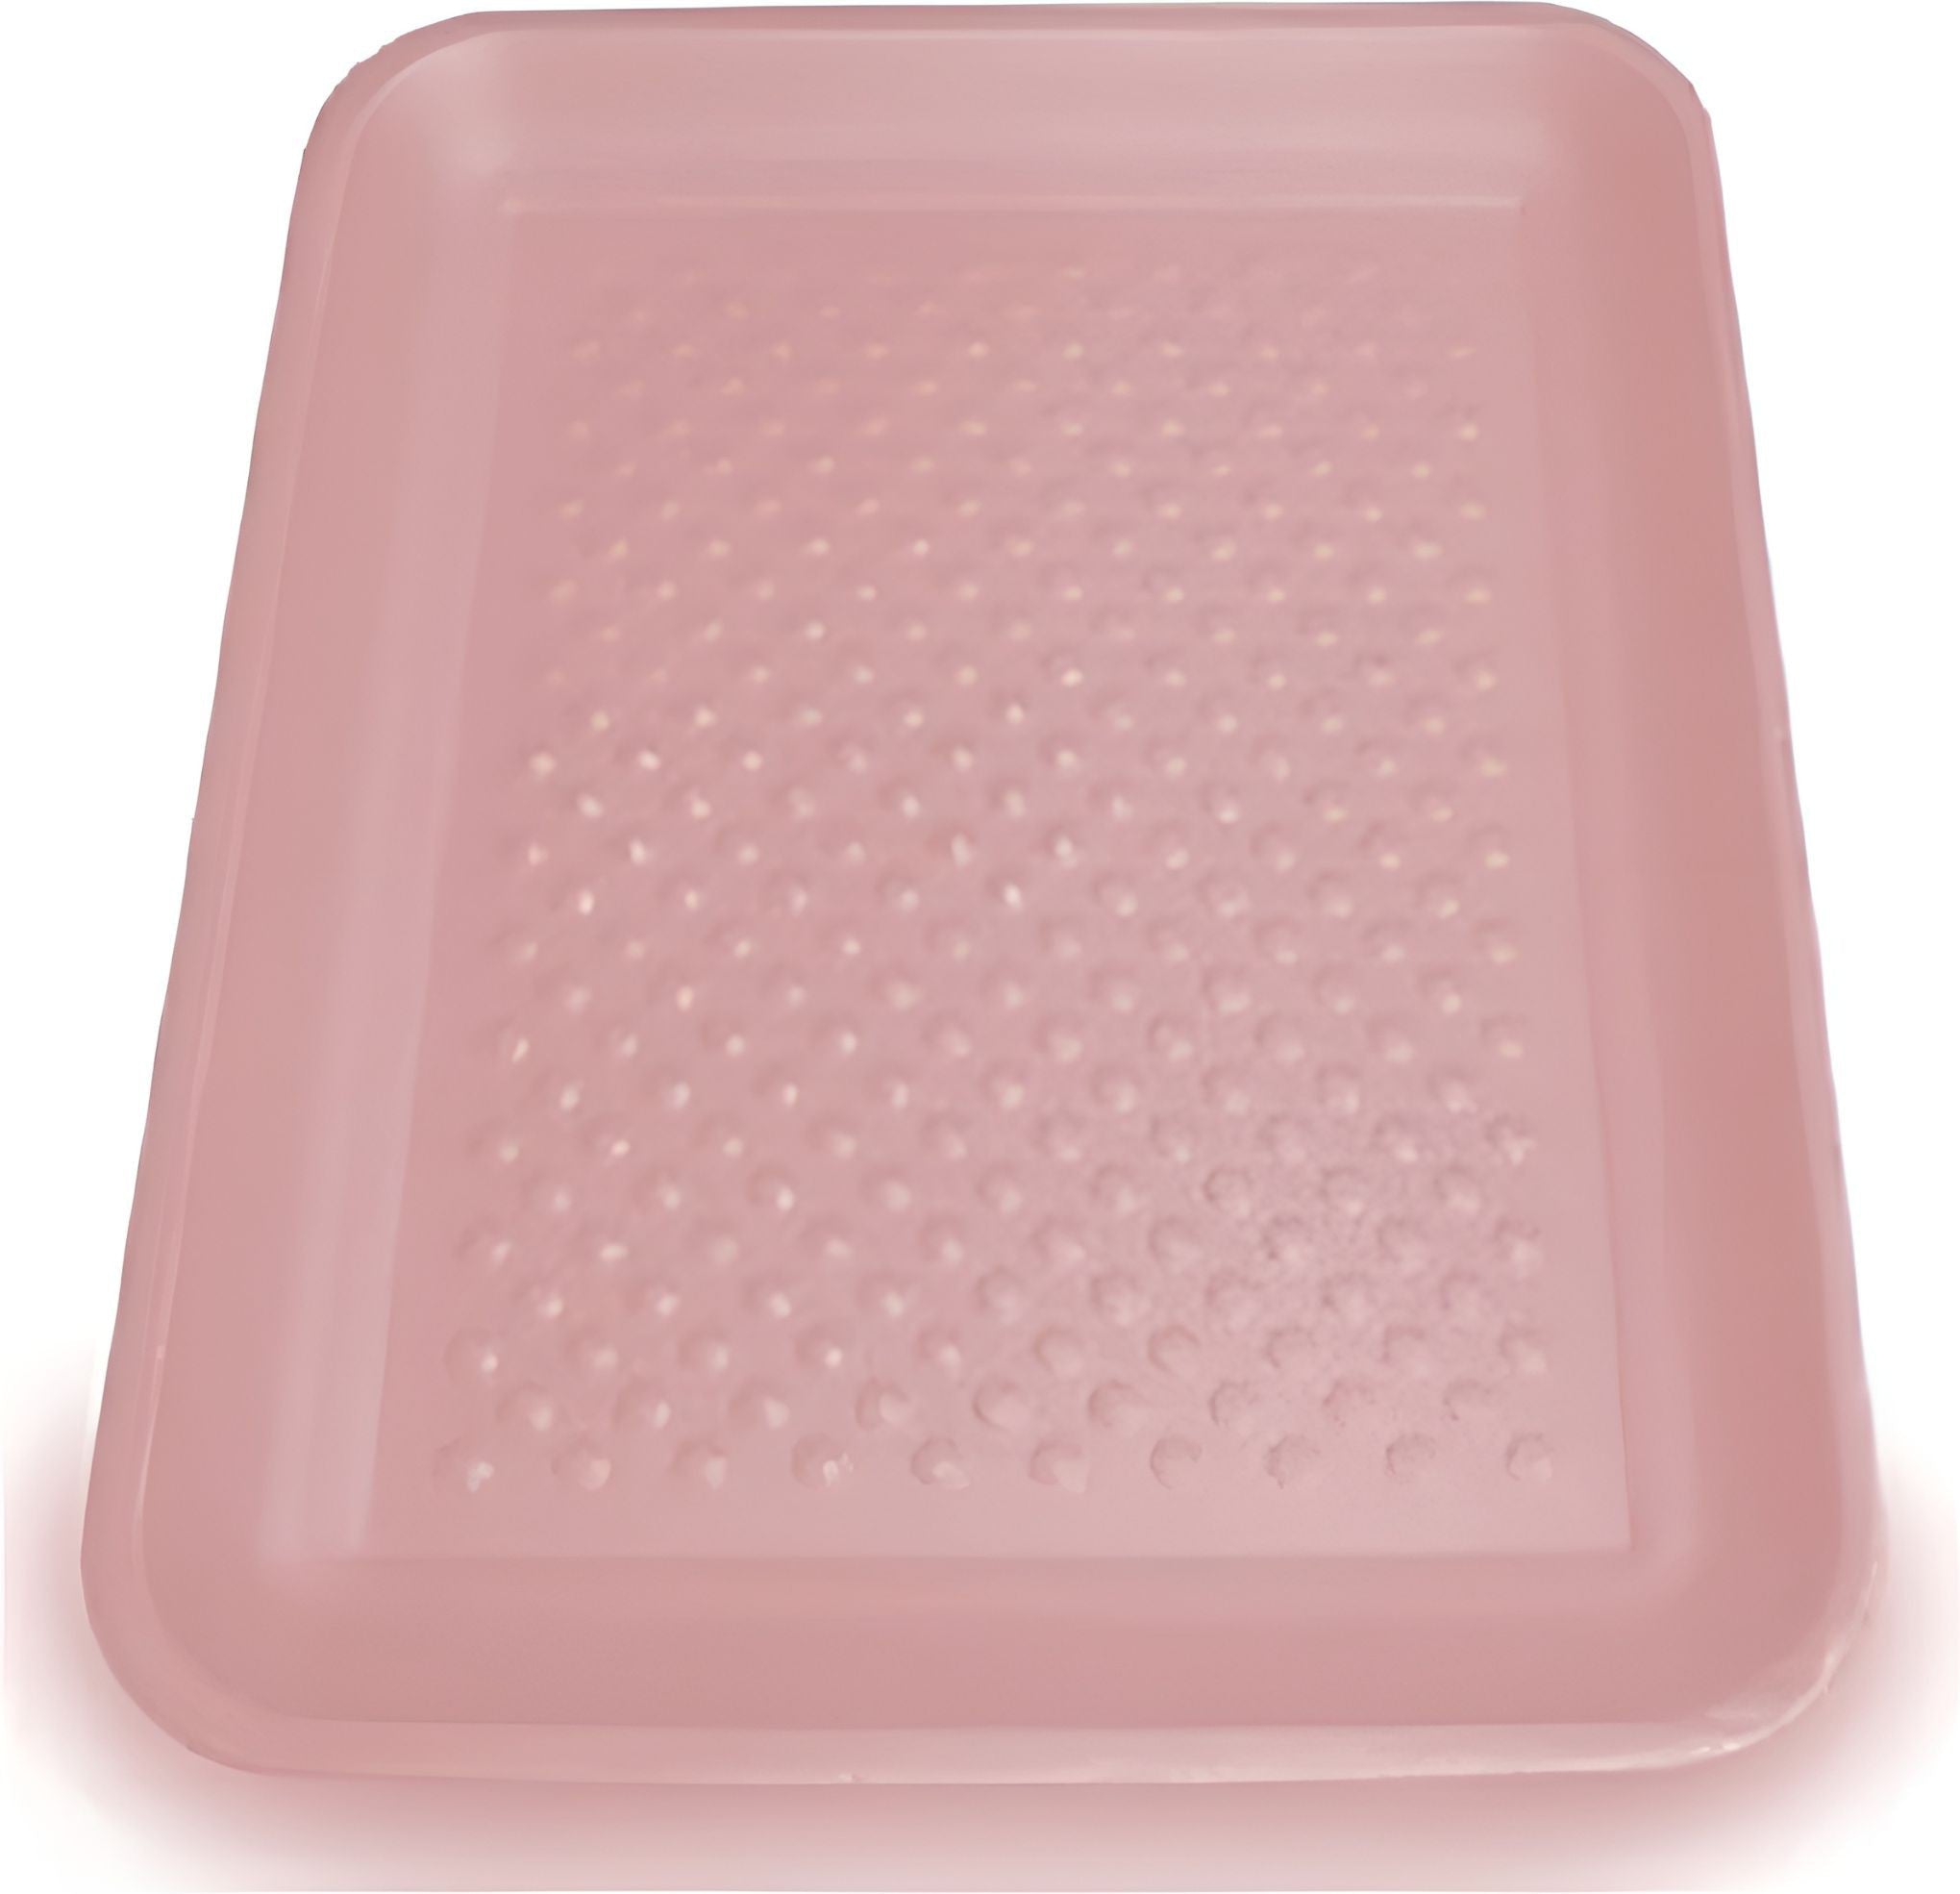 Dyne-A-Pak Inc. - 9.125" x7.125" x 0.625" 34/4S Pink Foam Meat Trays, 500 Per Case - 2010340P00